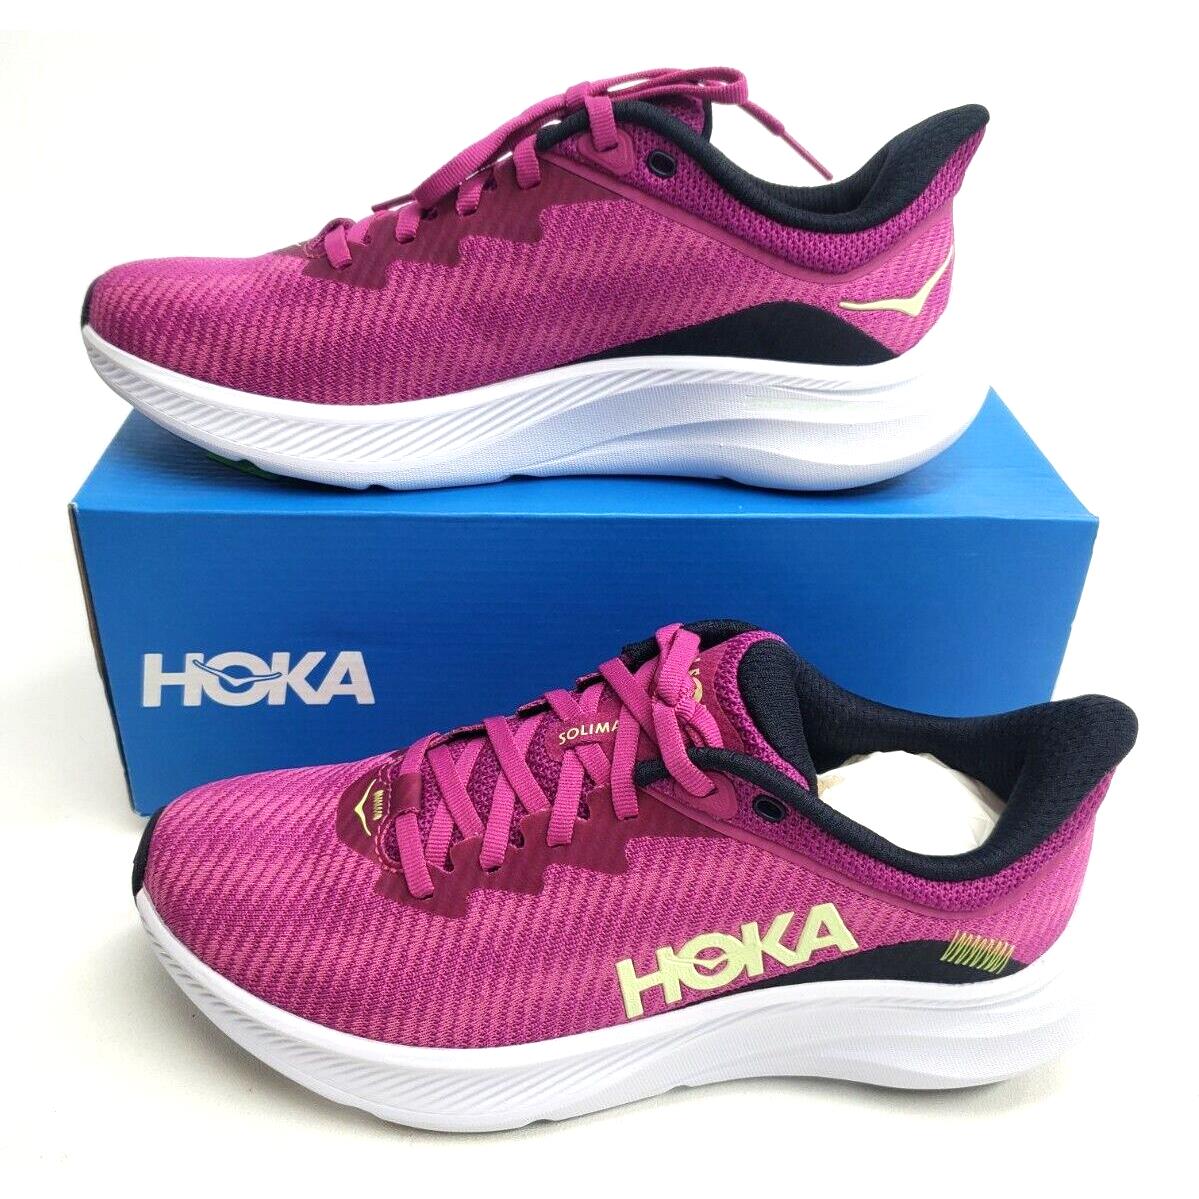 Hoka One One Solimar 1123075 Ffbt Fuchsia Running Shoes Sneakers Women`s Size 7